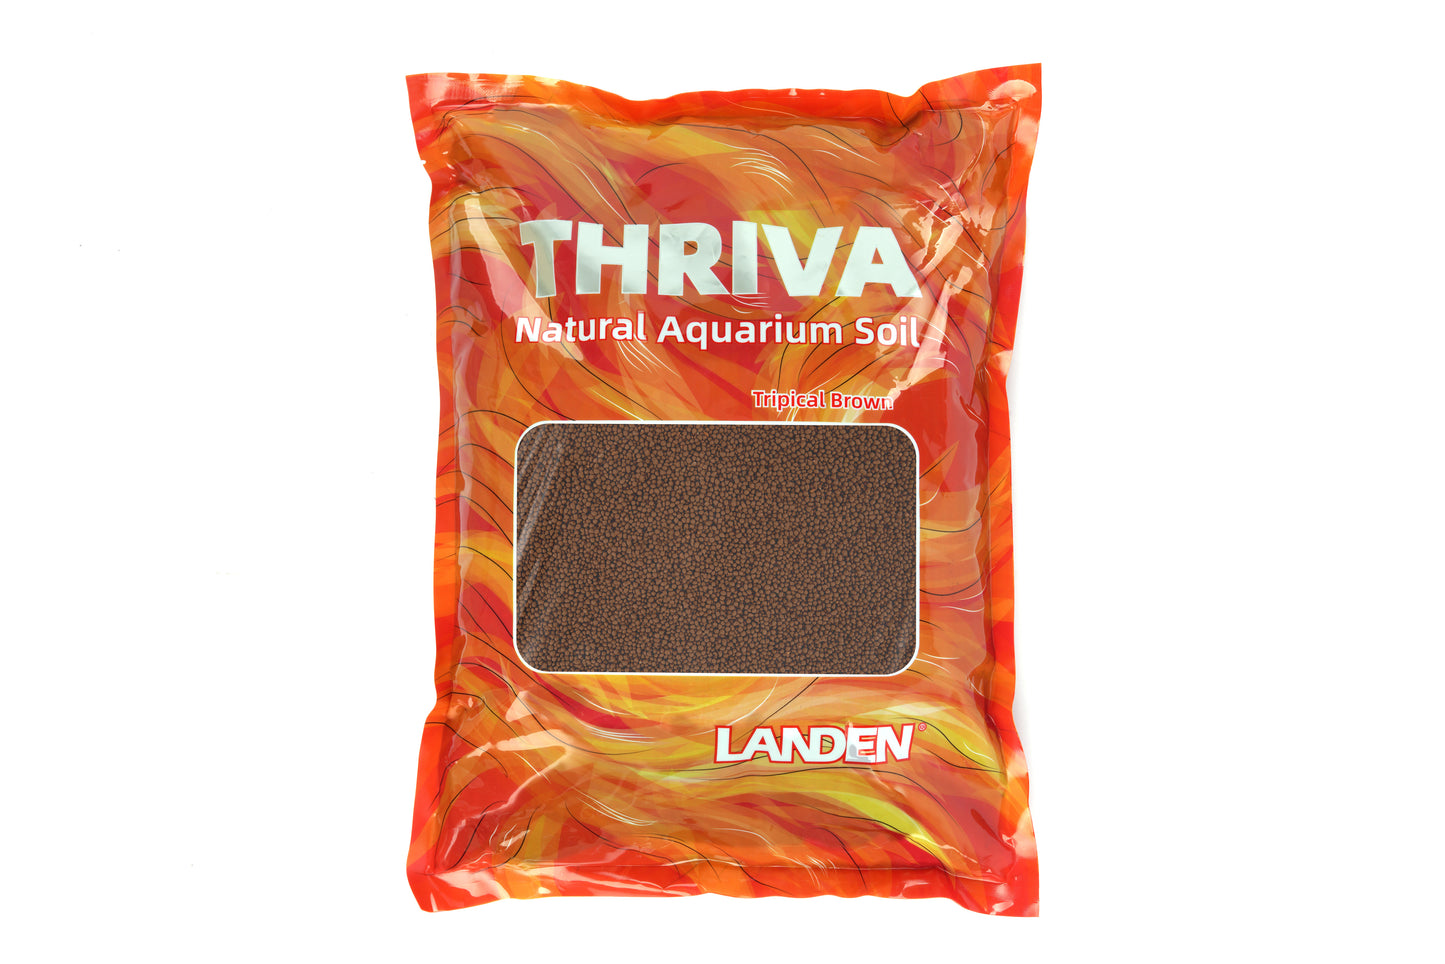 THRIVA Aqua Soil Substrate for Freshwater Aquarium, Black and Brown Color, 5L/ bag